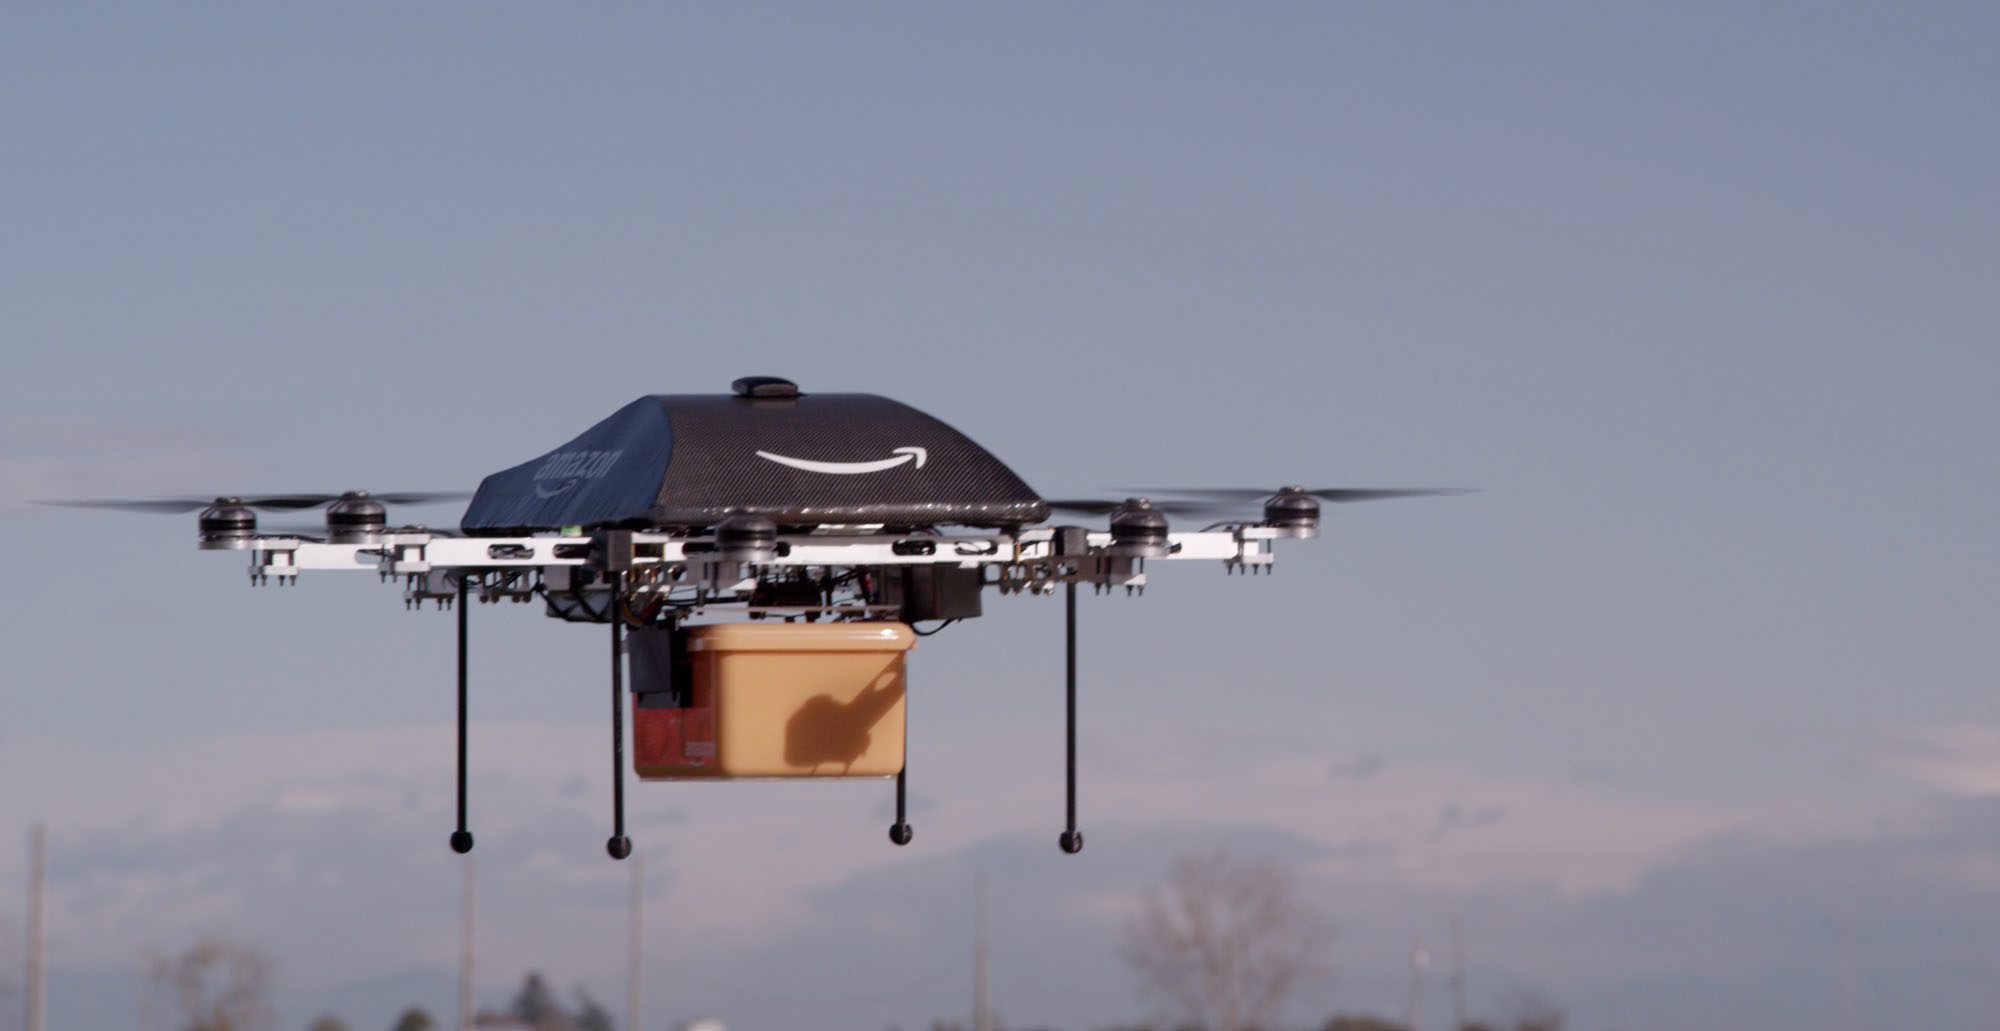 Amazon Prime Air - безпилотните летателни апарати на интернет гиганта